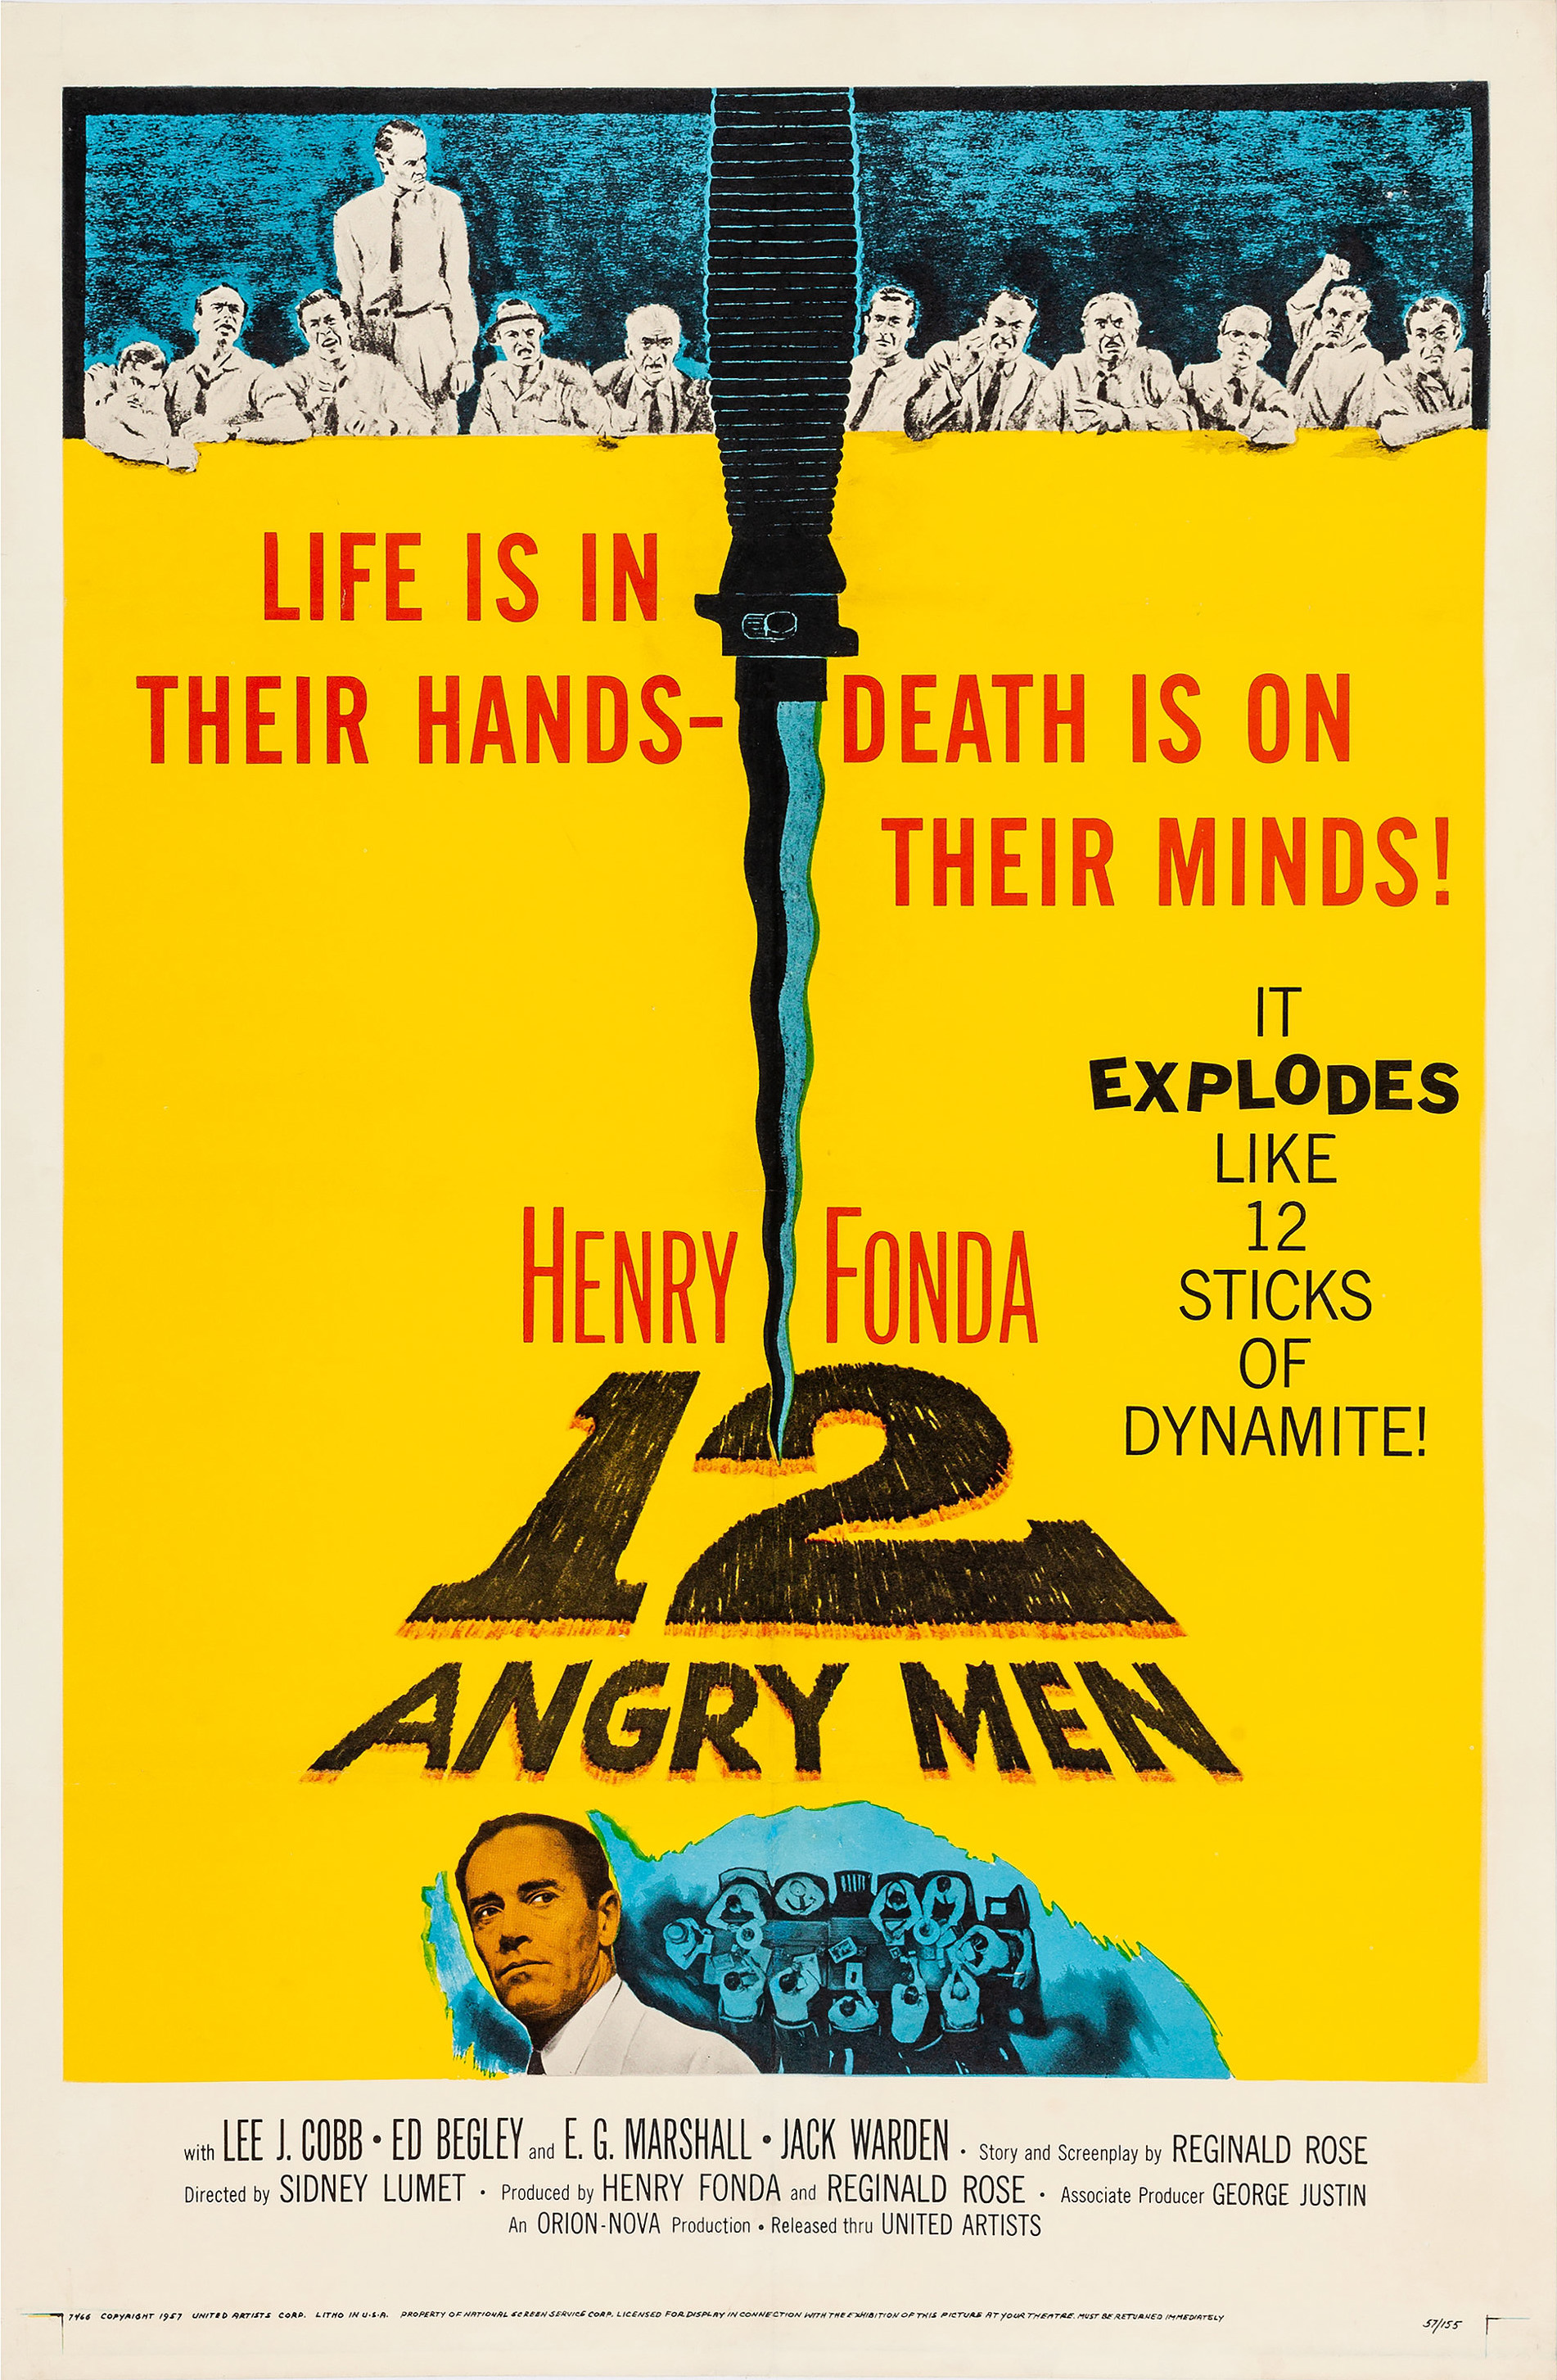 12 Angry Men (1957 film) - Wikipedia